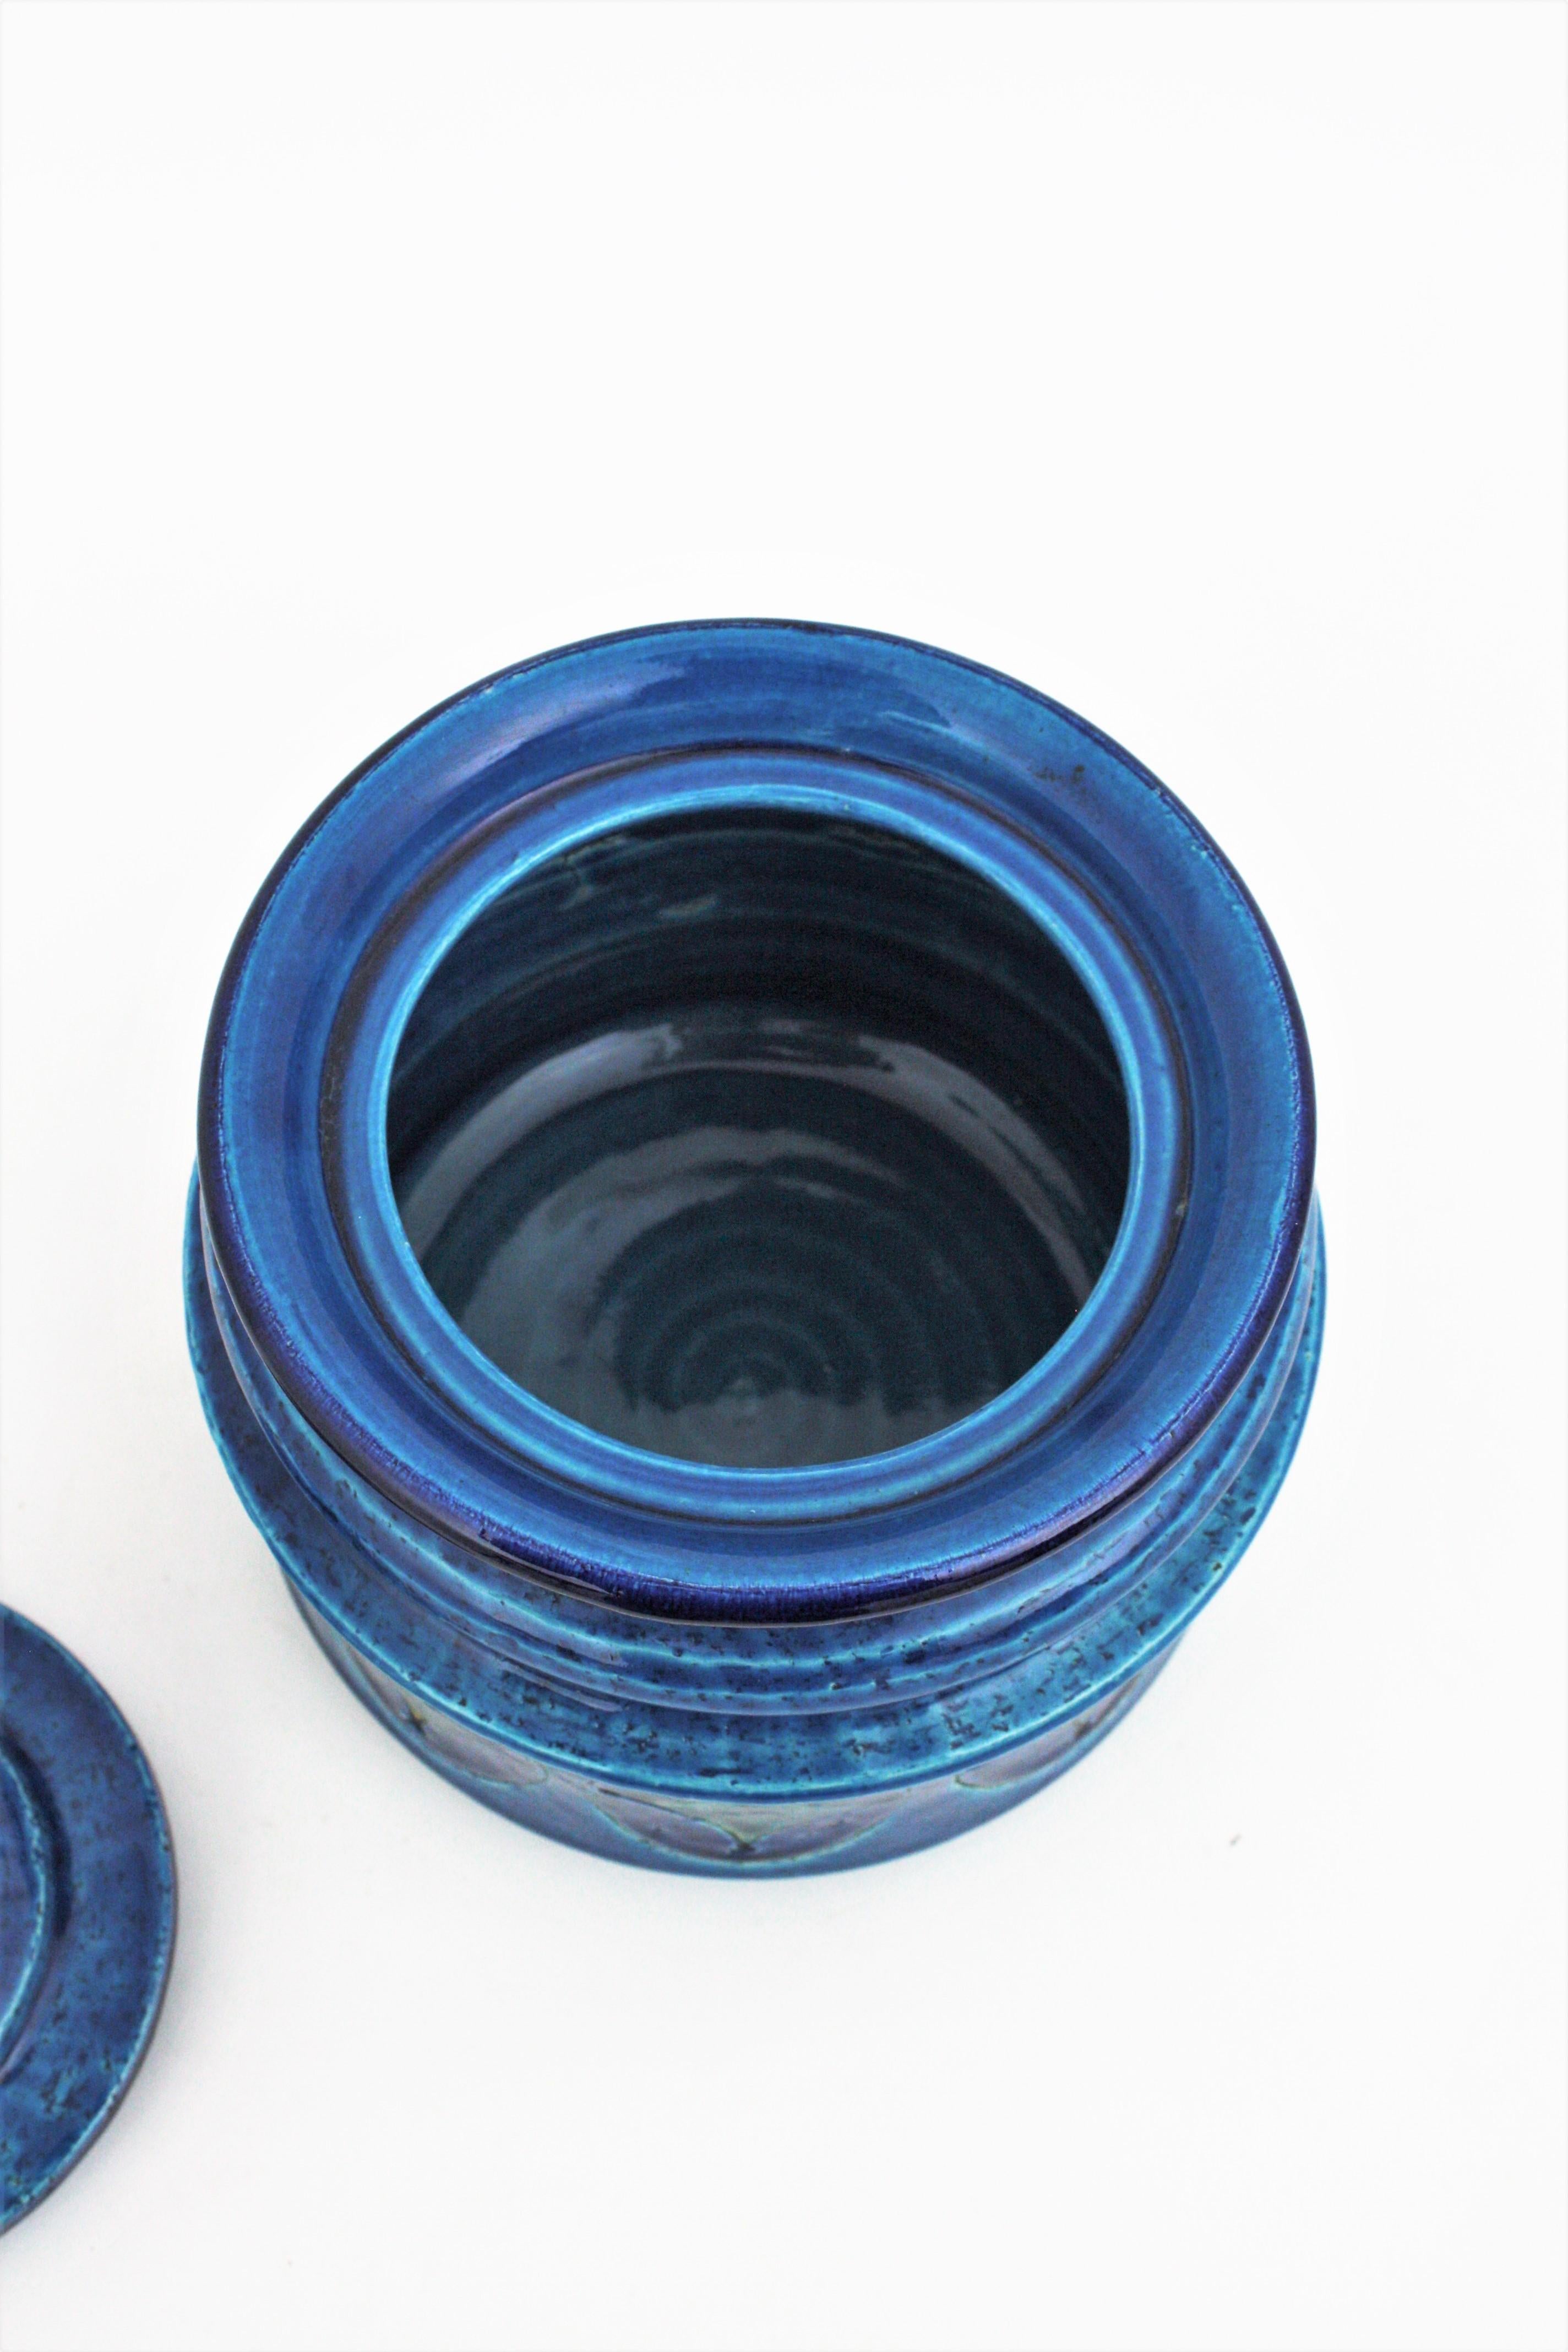 Aldo Londi Bitossi Blue Ceramic Lidded Box / Pot Circles and Rhombus Motif 3